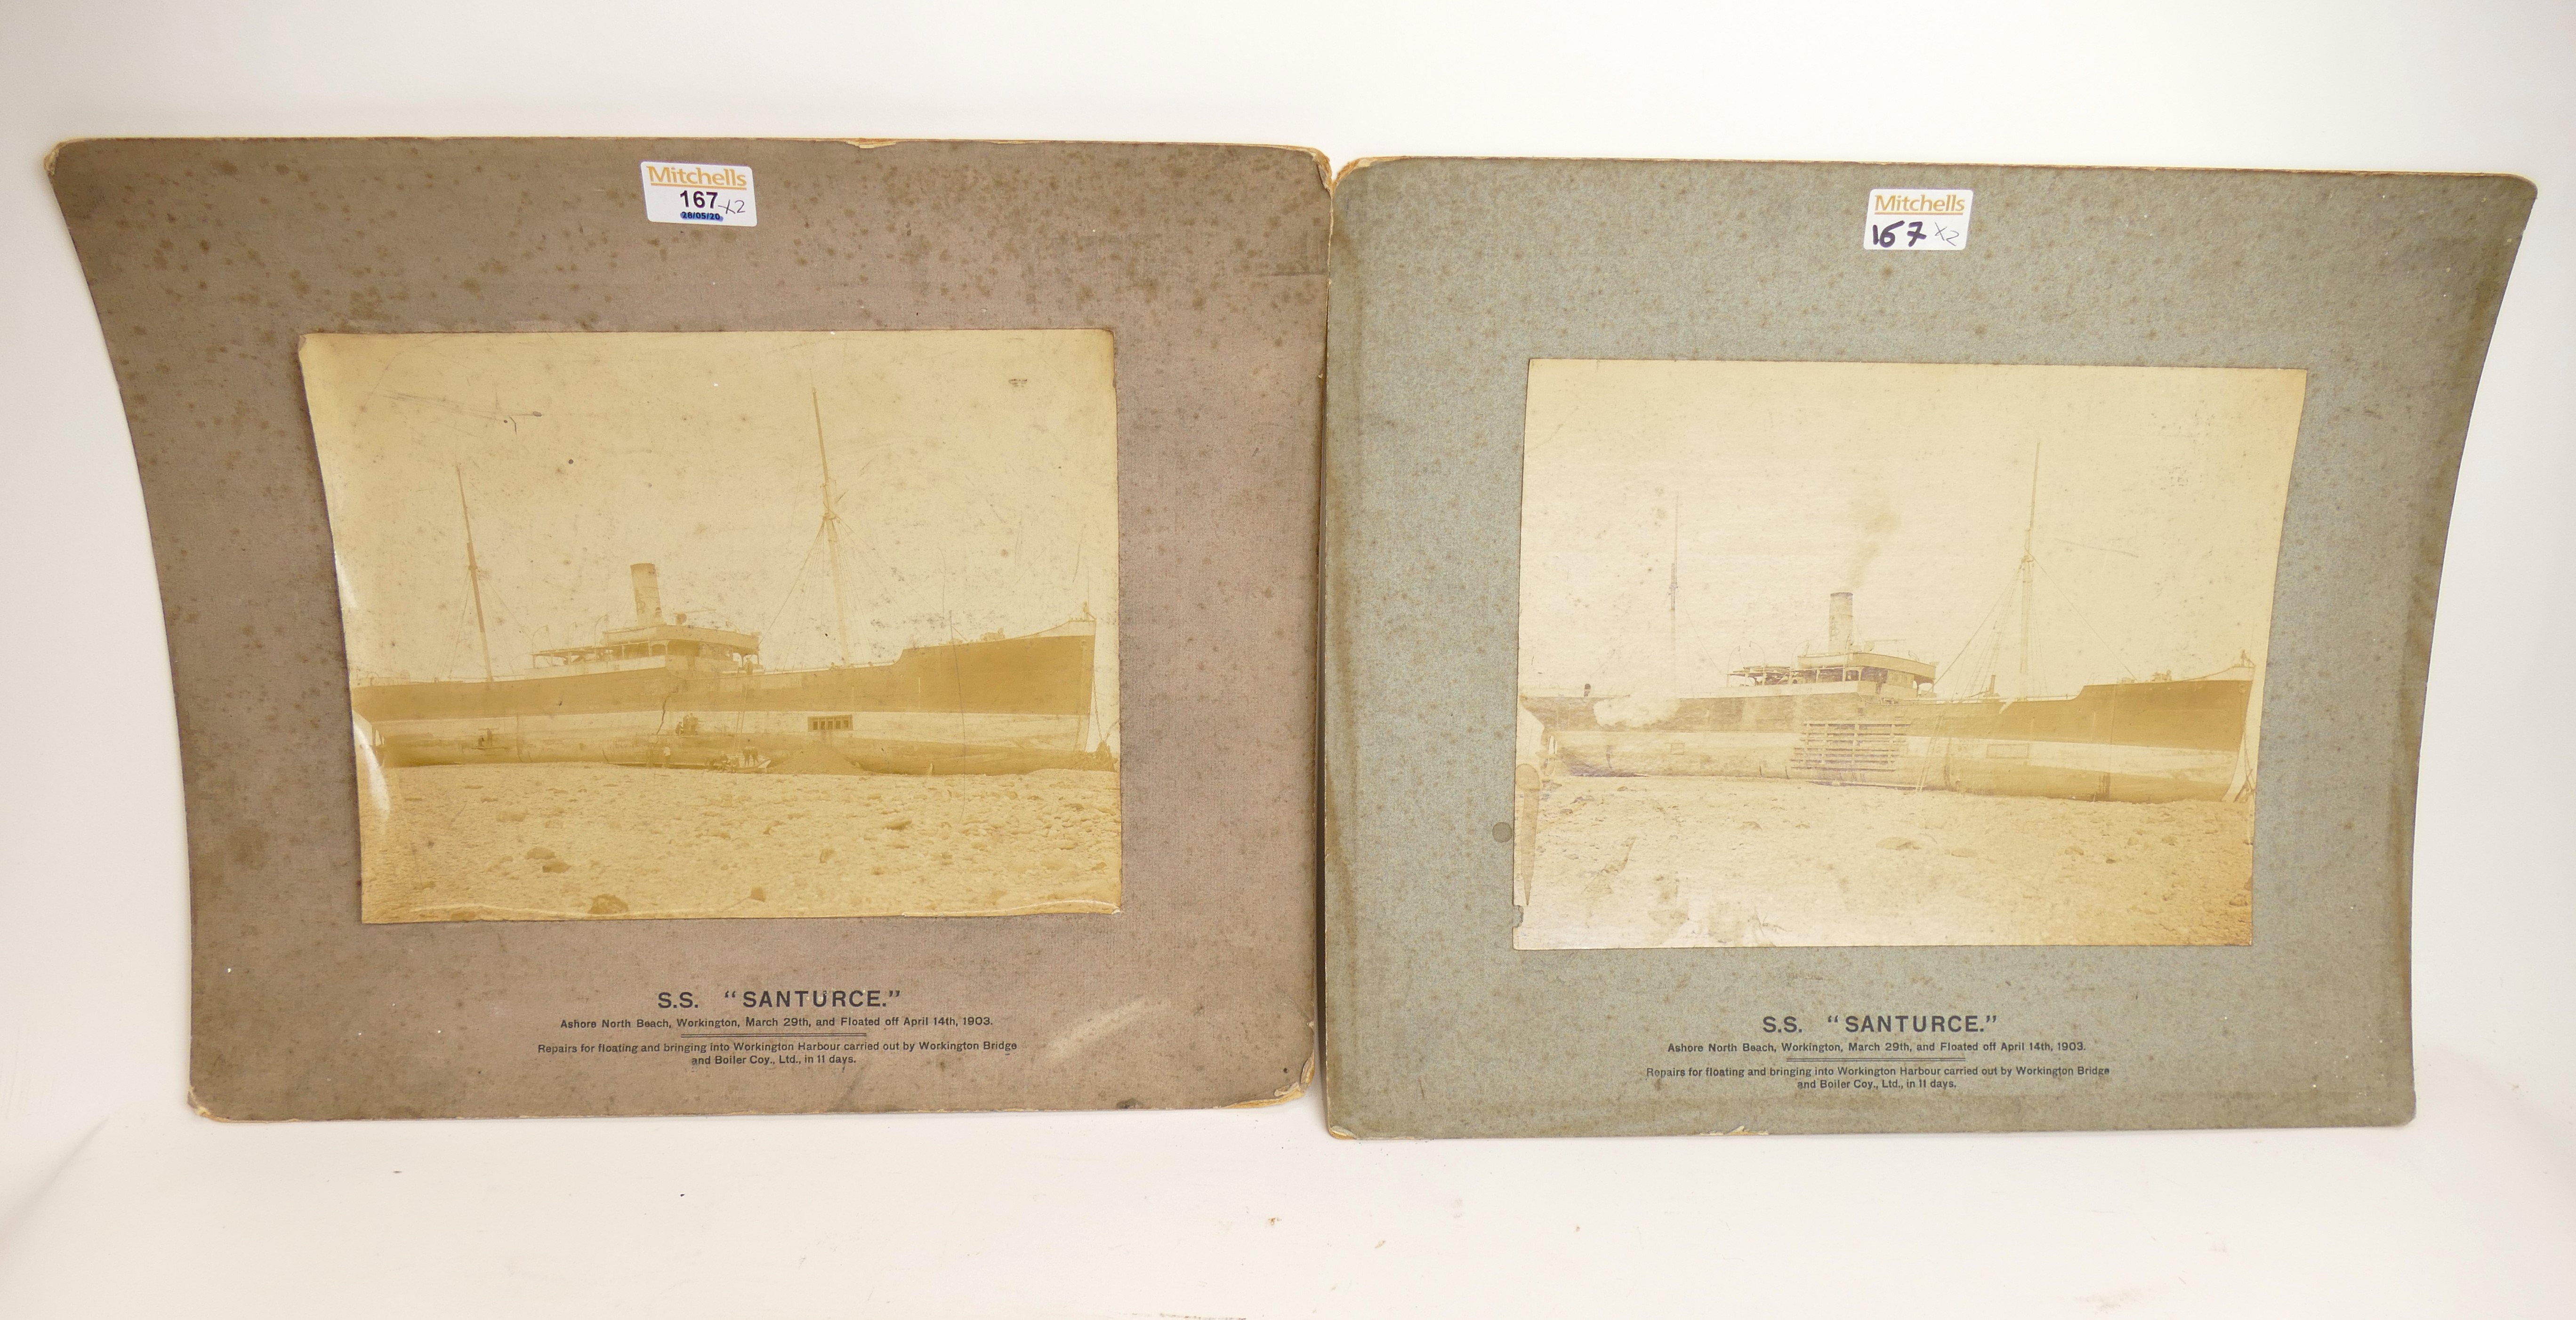 Two photographs of The SS "Santurce" Ash